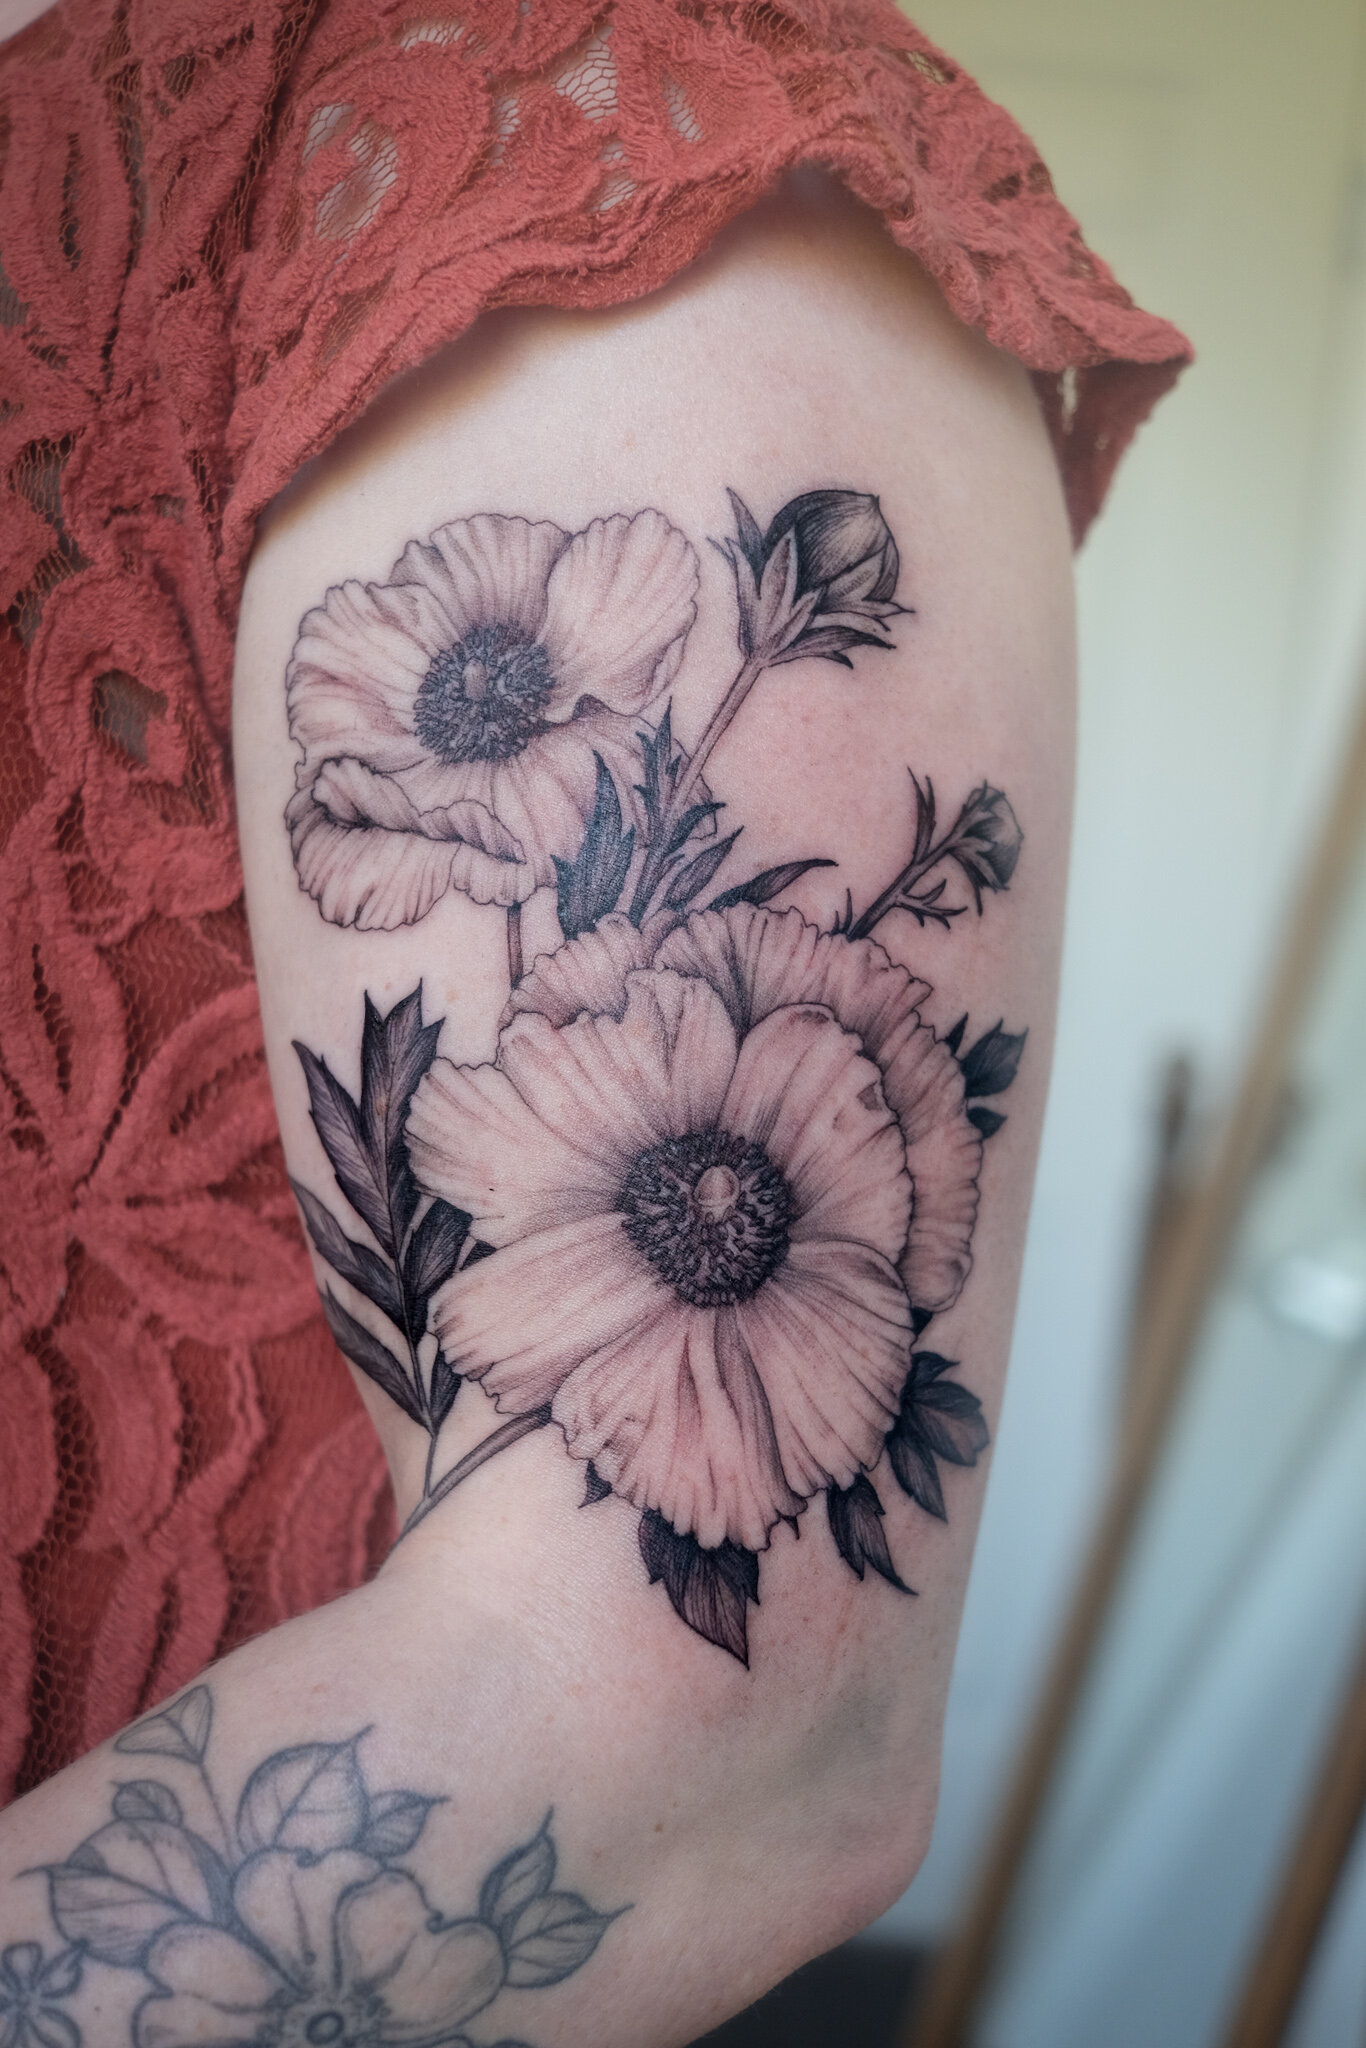 Inner arm tattoo of a poppy